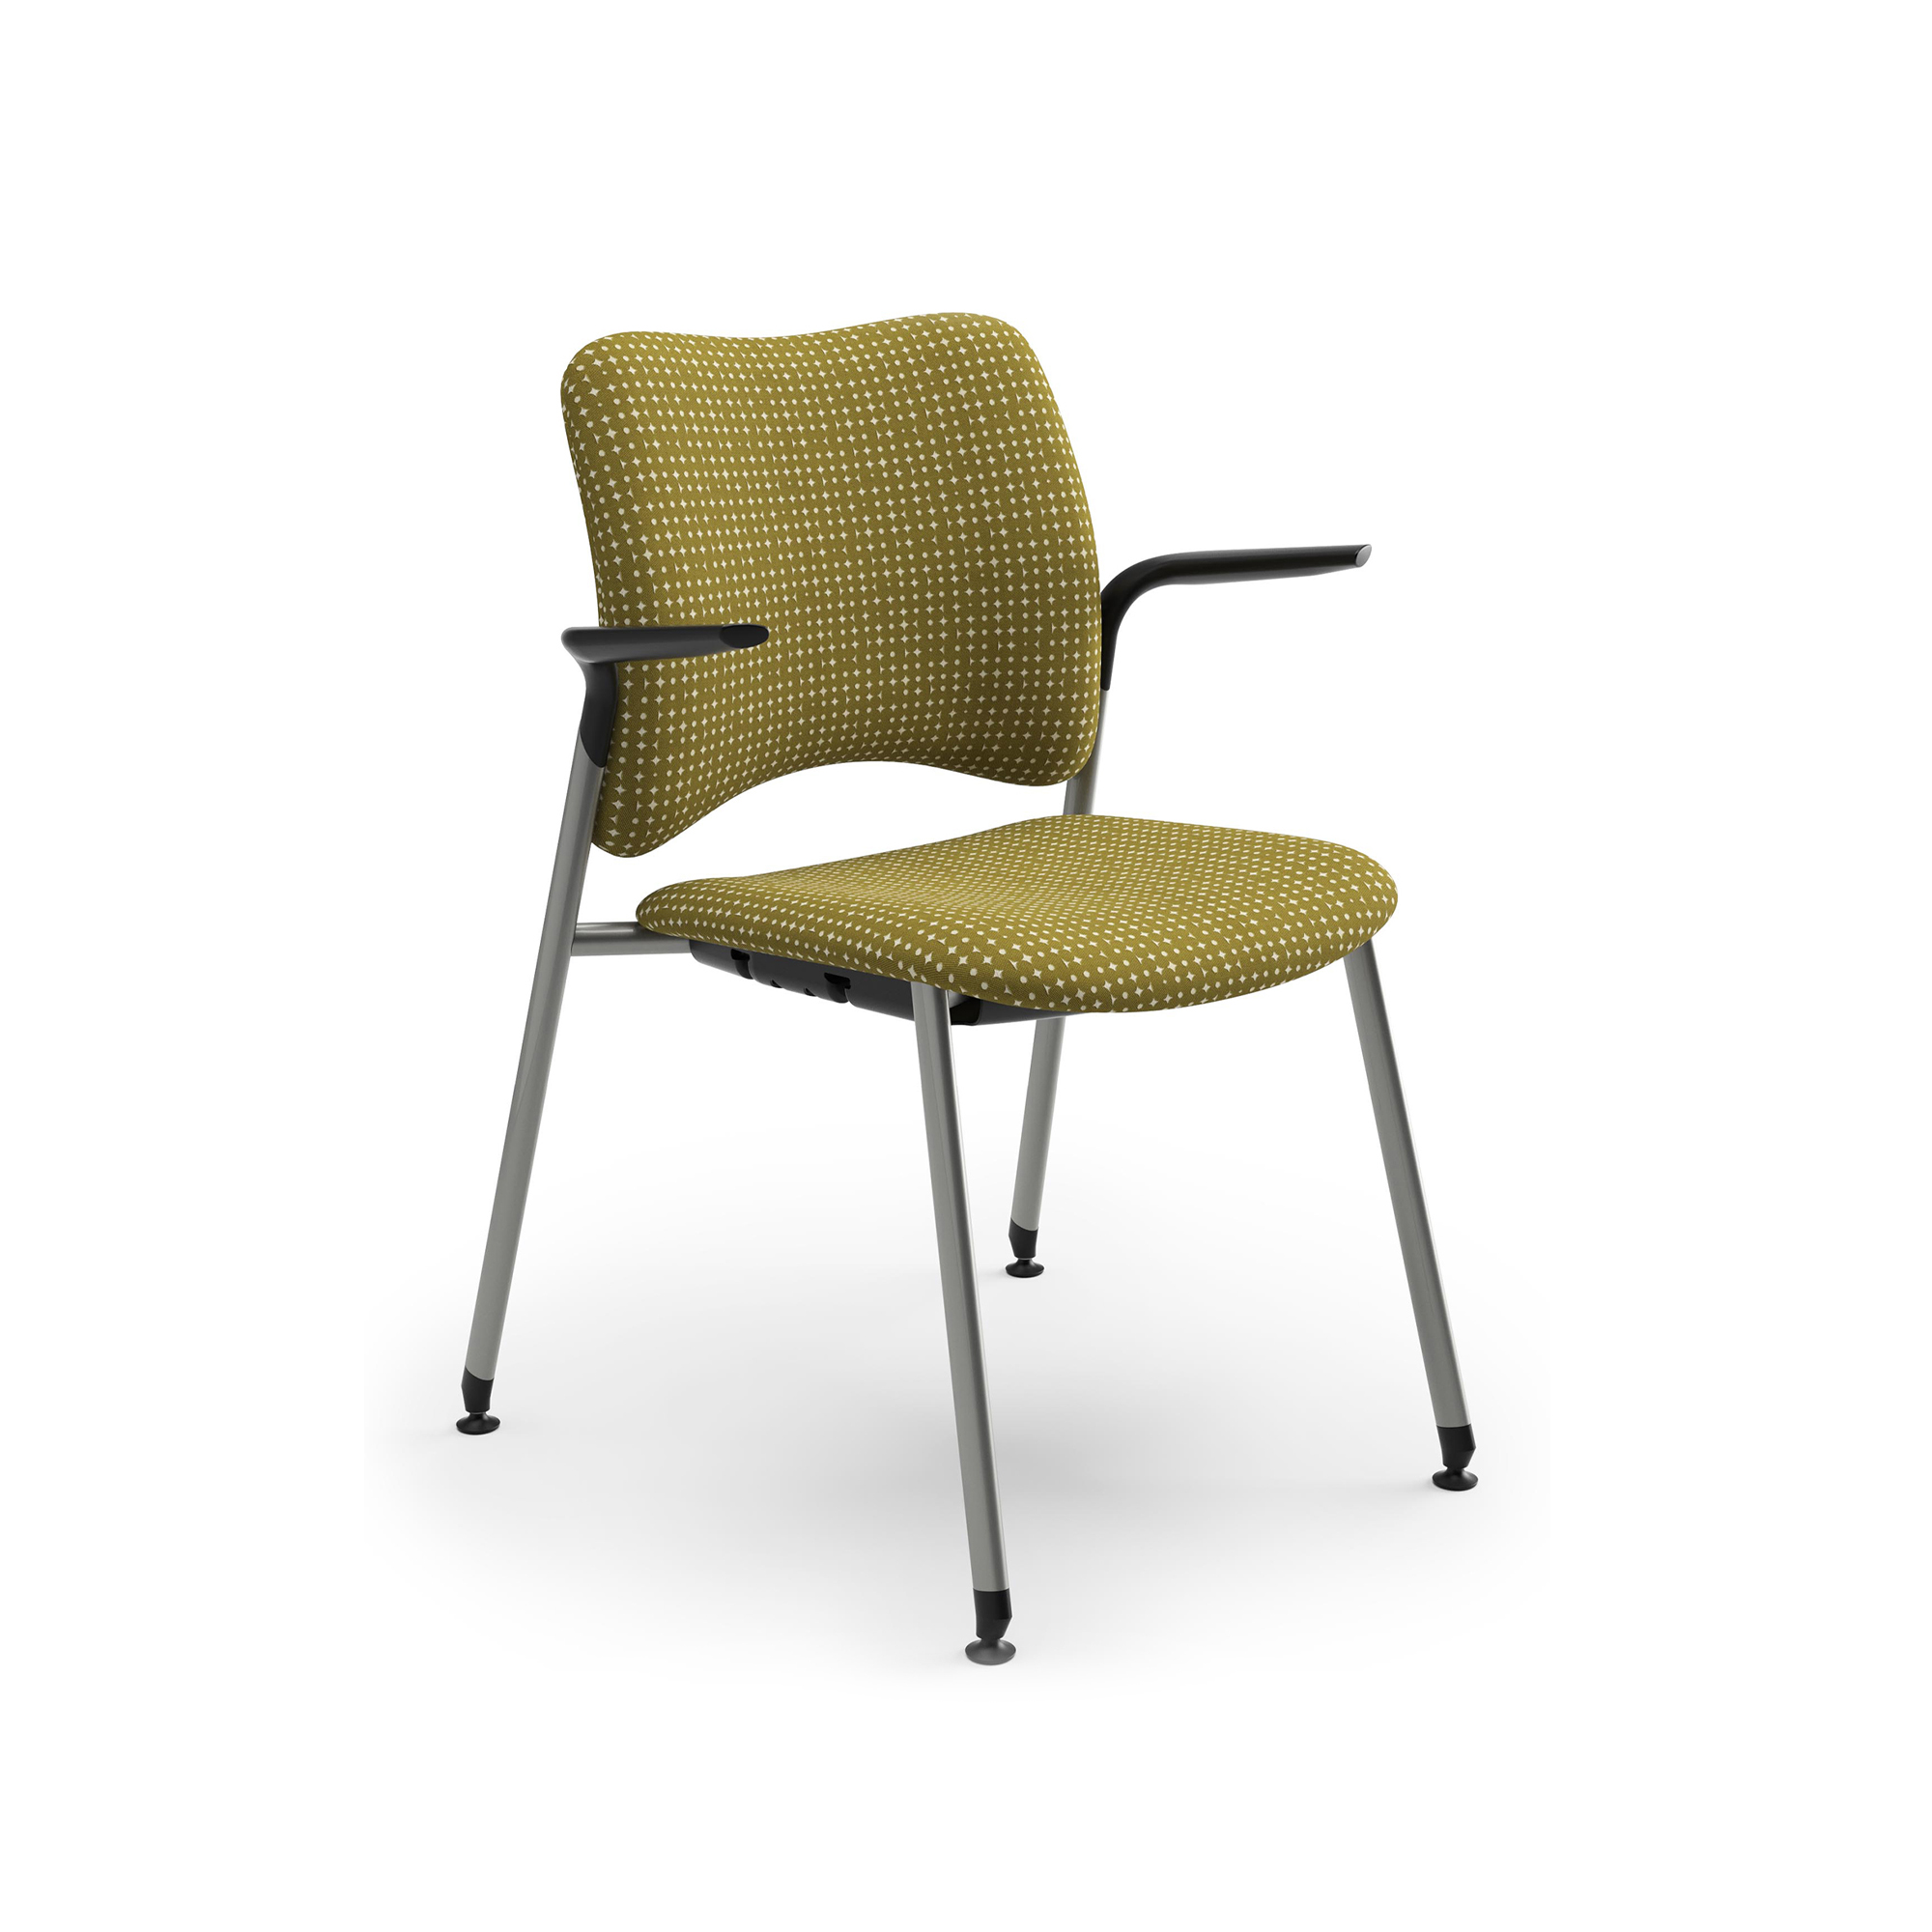 Nexxt Guest Chair, Arms, Glides